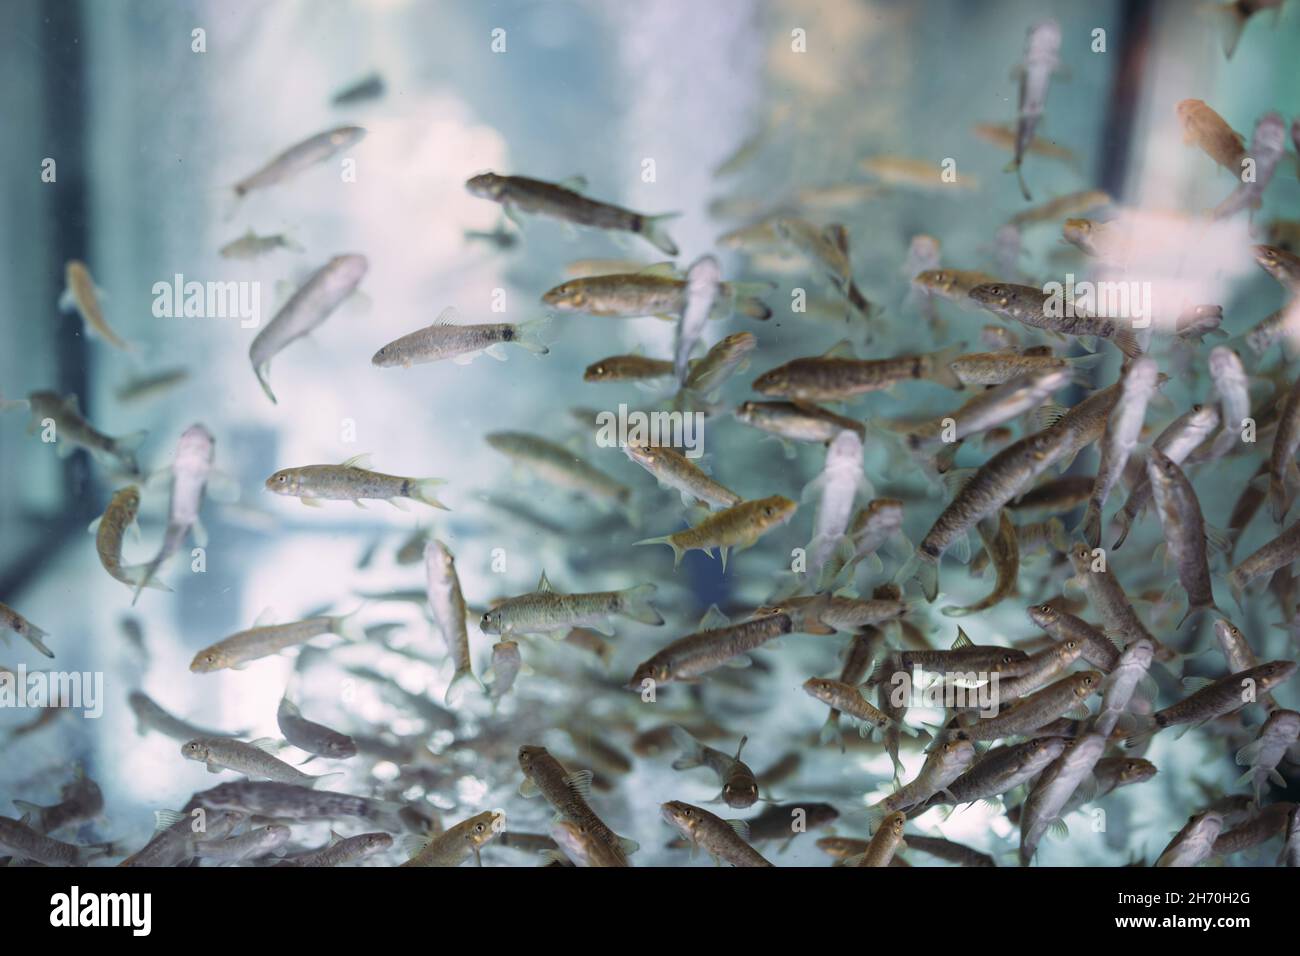 Lots of small garra rufa fish in a fish pilling aquarium or fish spa Stock Photo